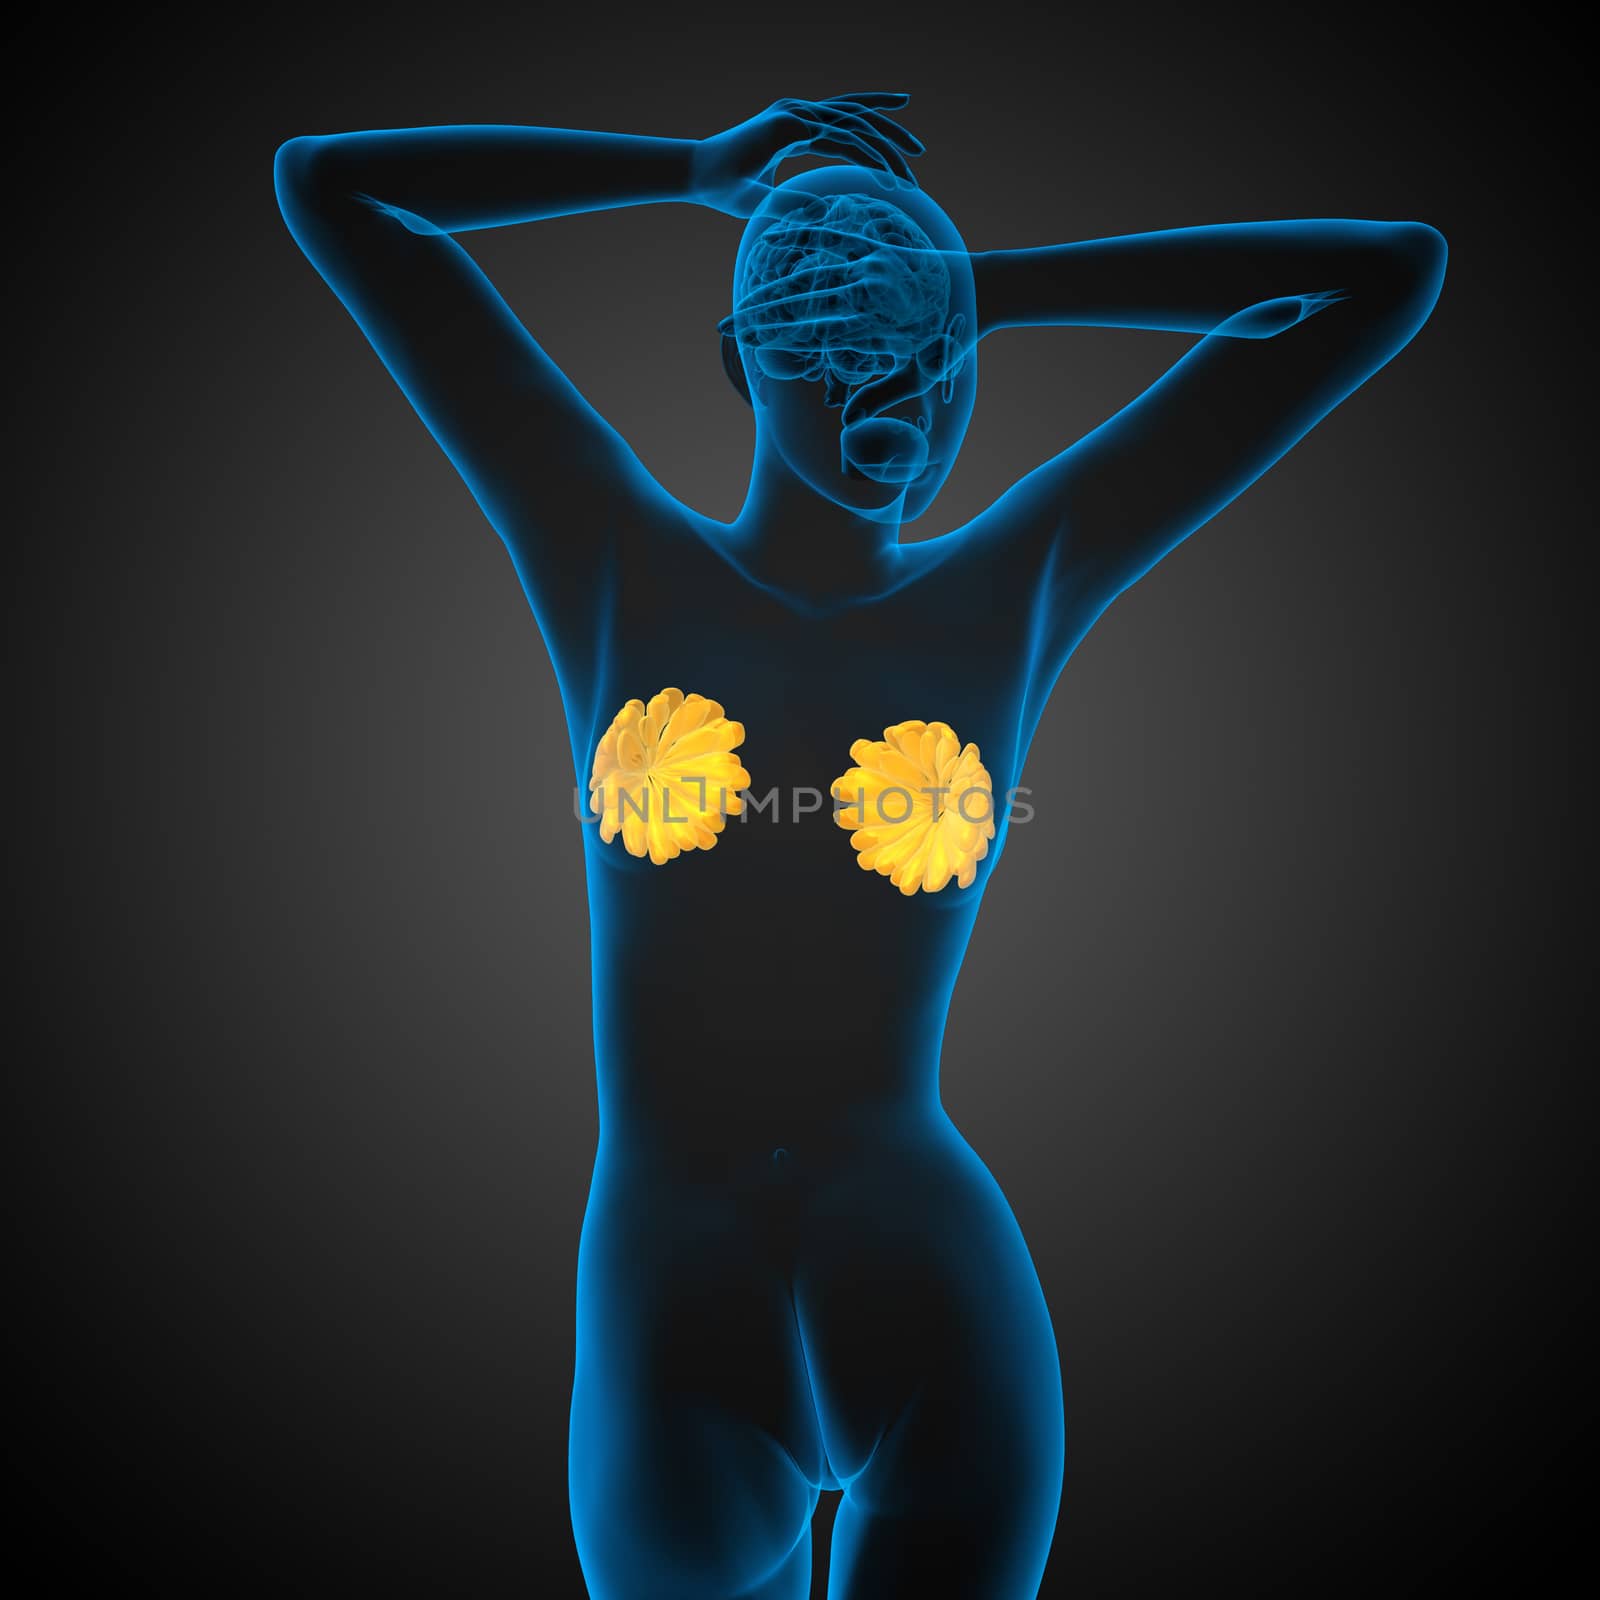 3d render medical illustration of the human breast - back view